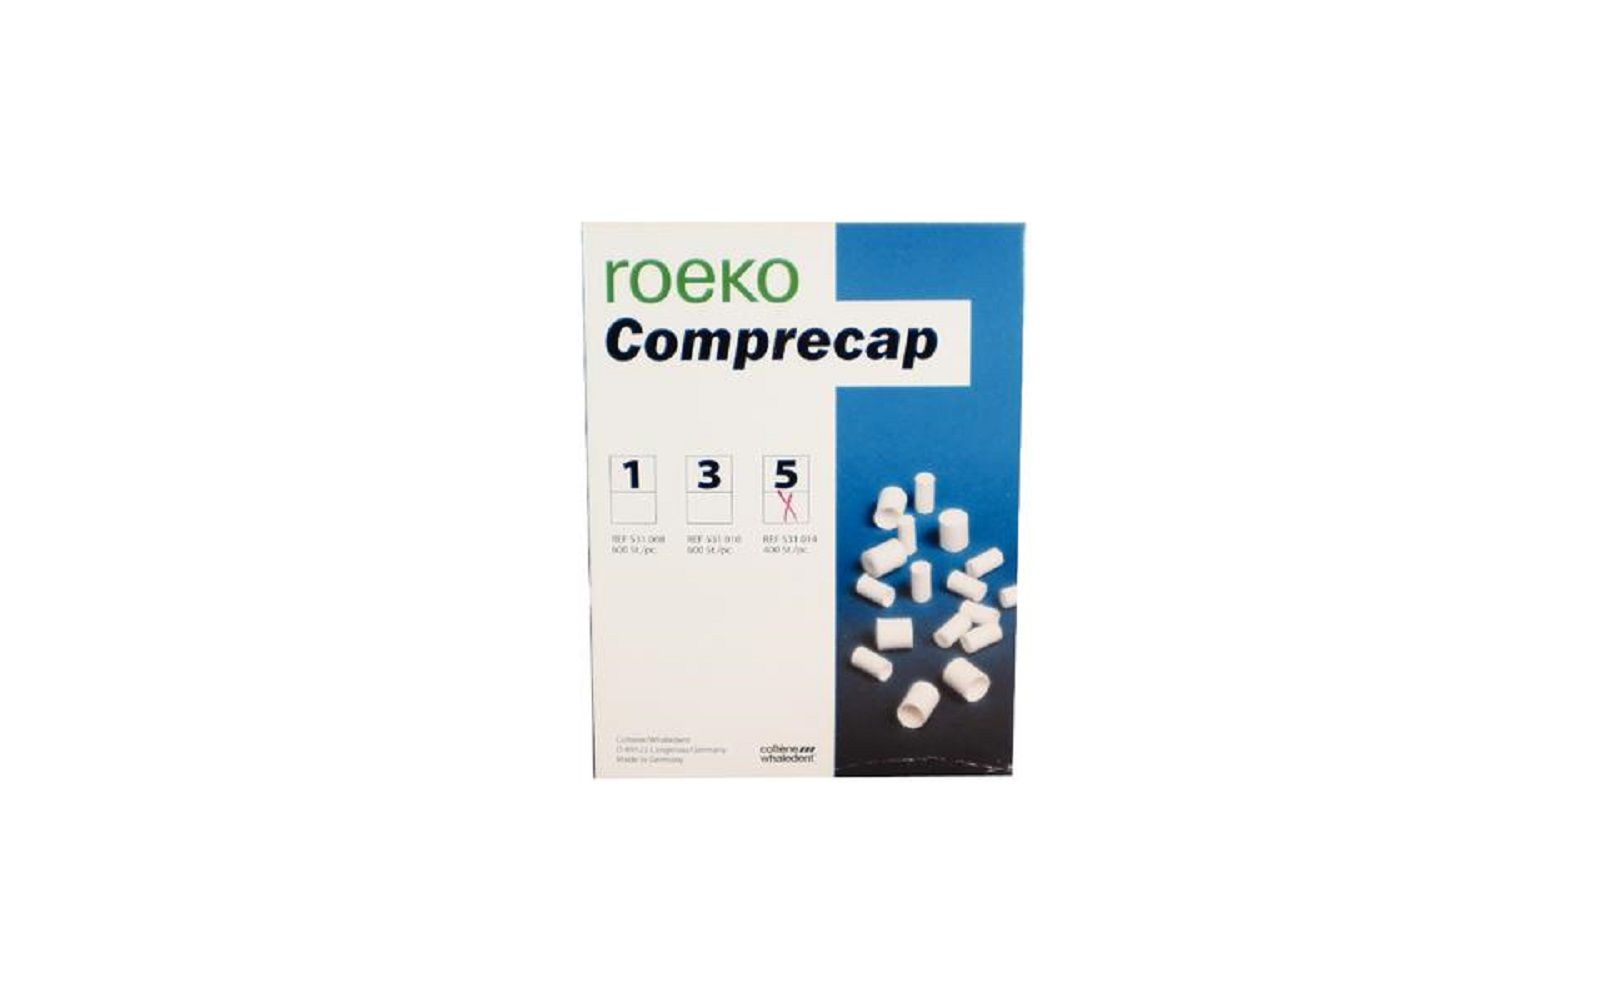 Roeko comprecap compression caps, clinic pack - coltene